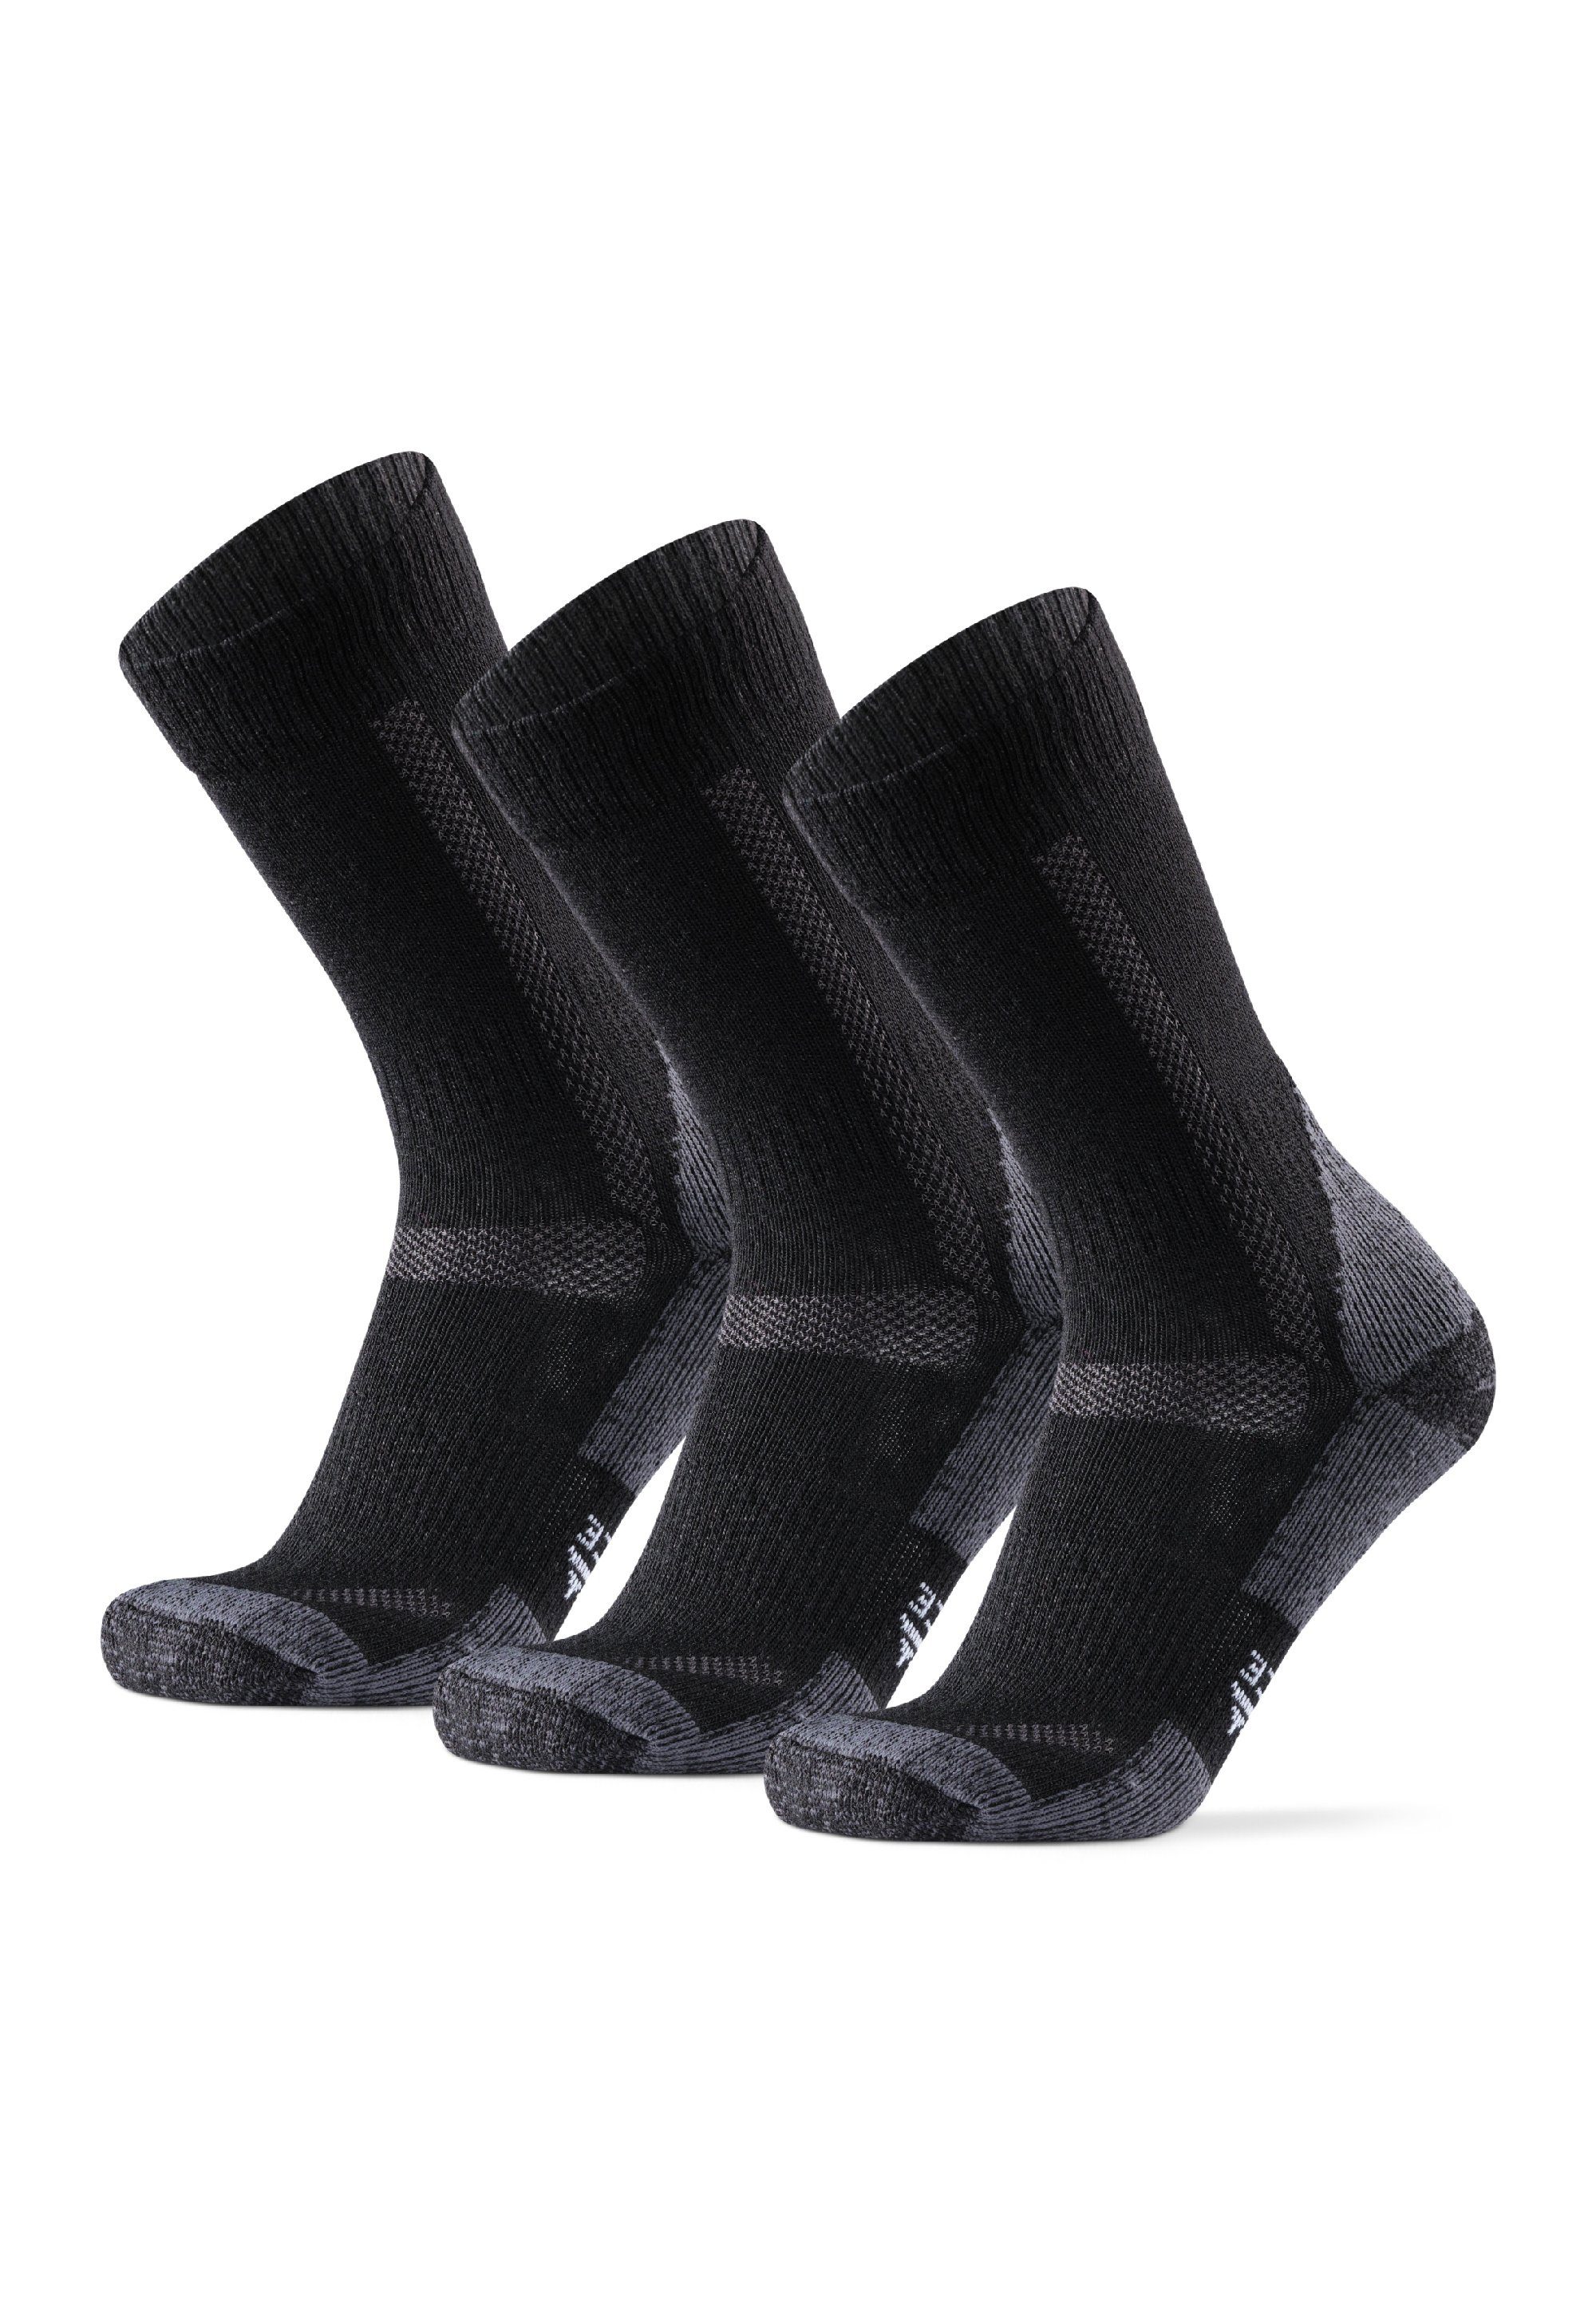 DANISH ENDURANCE Wandersocken Merino Hiking Classic Socks (Packung, 3-Paar) Anti-Blasen, für Herren, Damen & Kinder Black/Grey